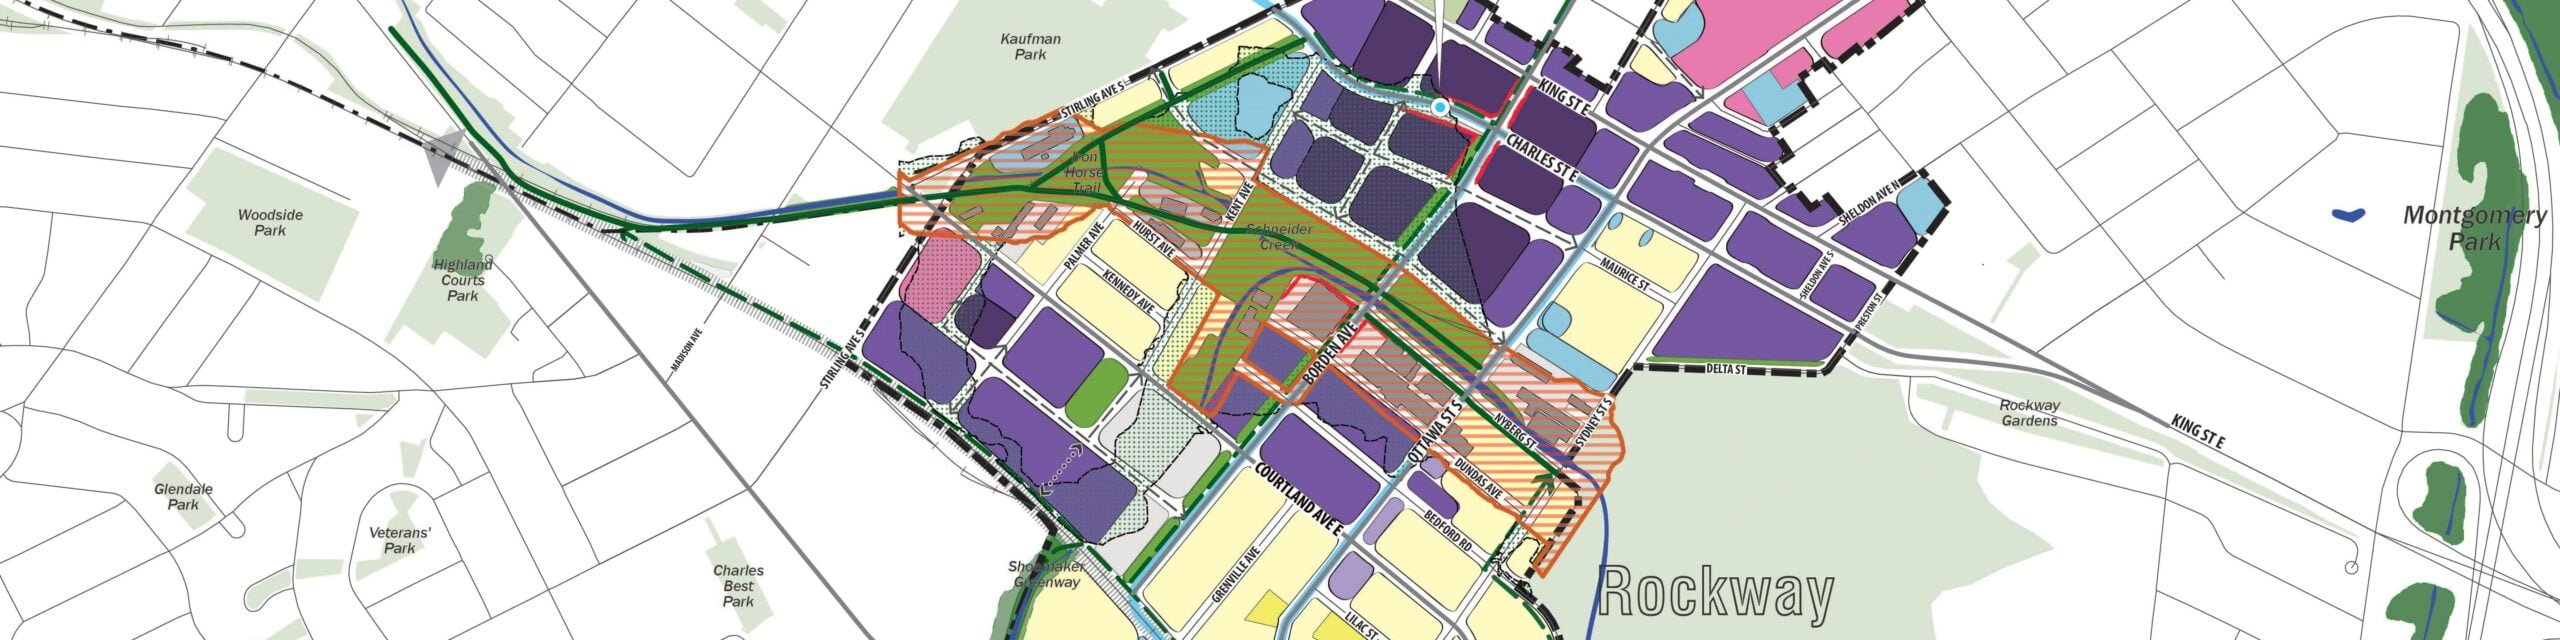 Midtown & Rockway transportation map